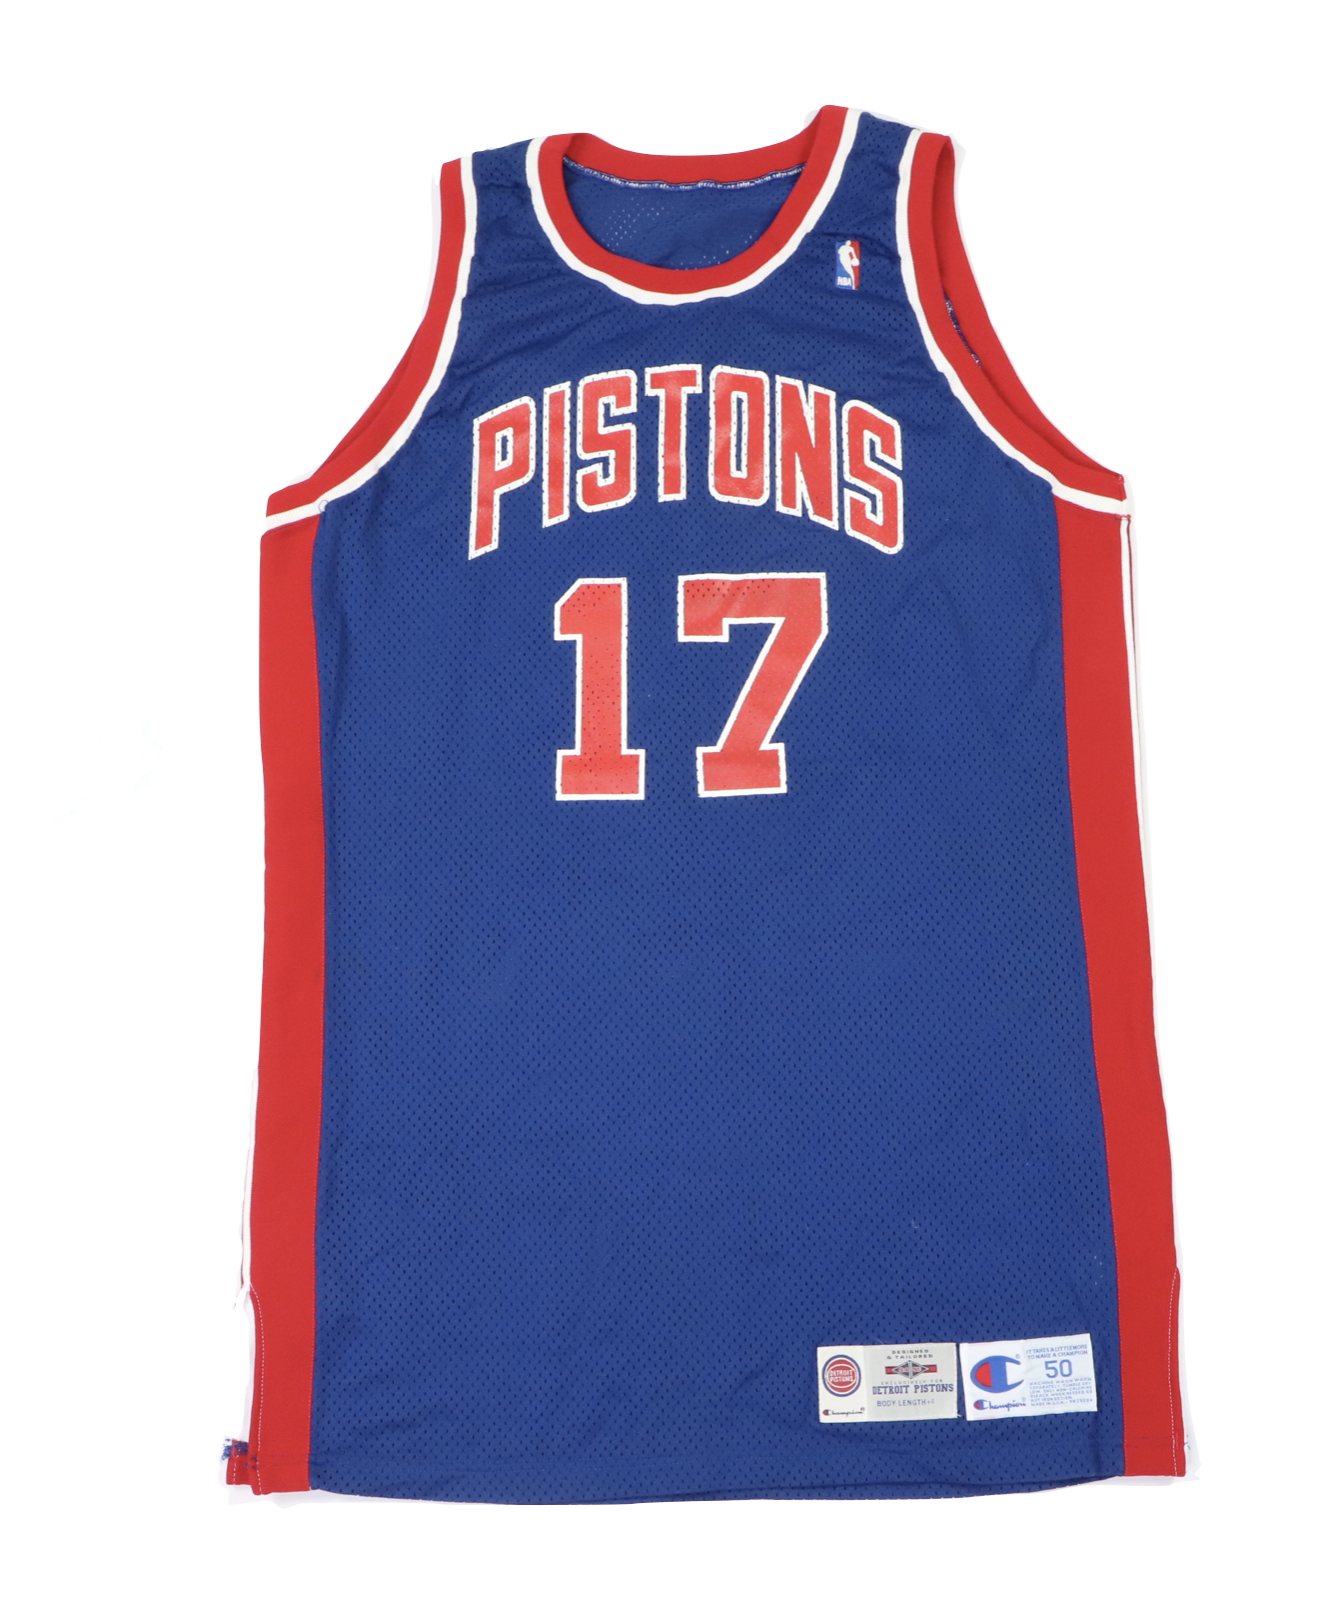 Vtg Champion NBA Detroit Pistons Basketball Jersey Gamer 94/95 Blue 50 Curley - $295.96